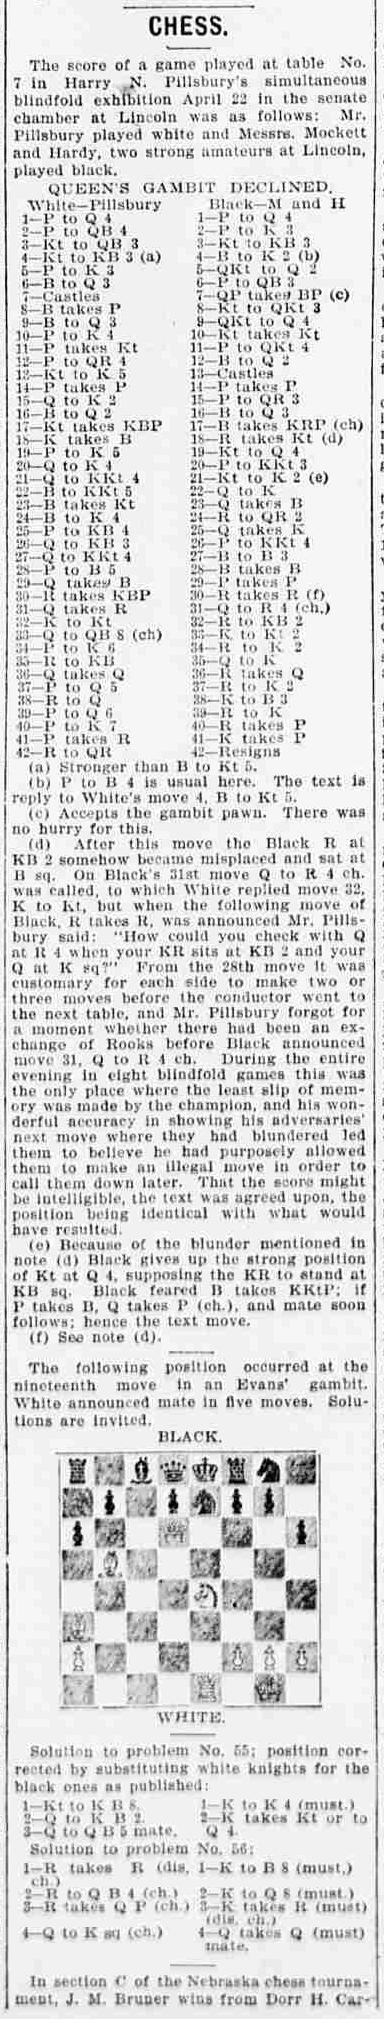 1899.05.07-01 Omaha Daily Bee.jpg